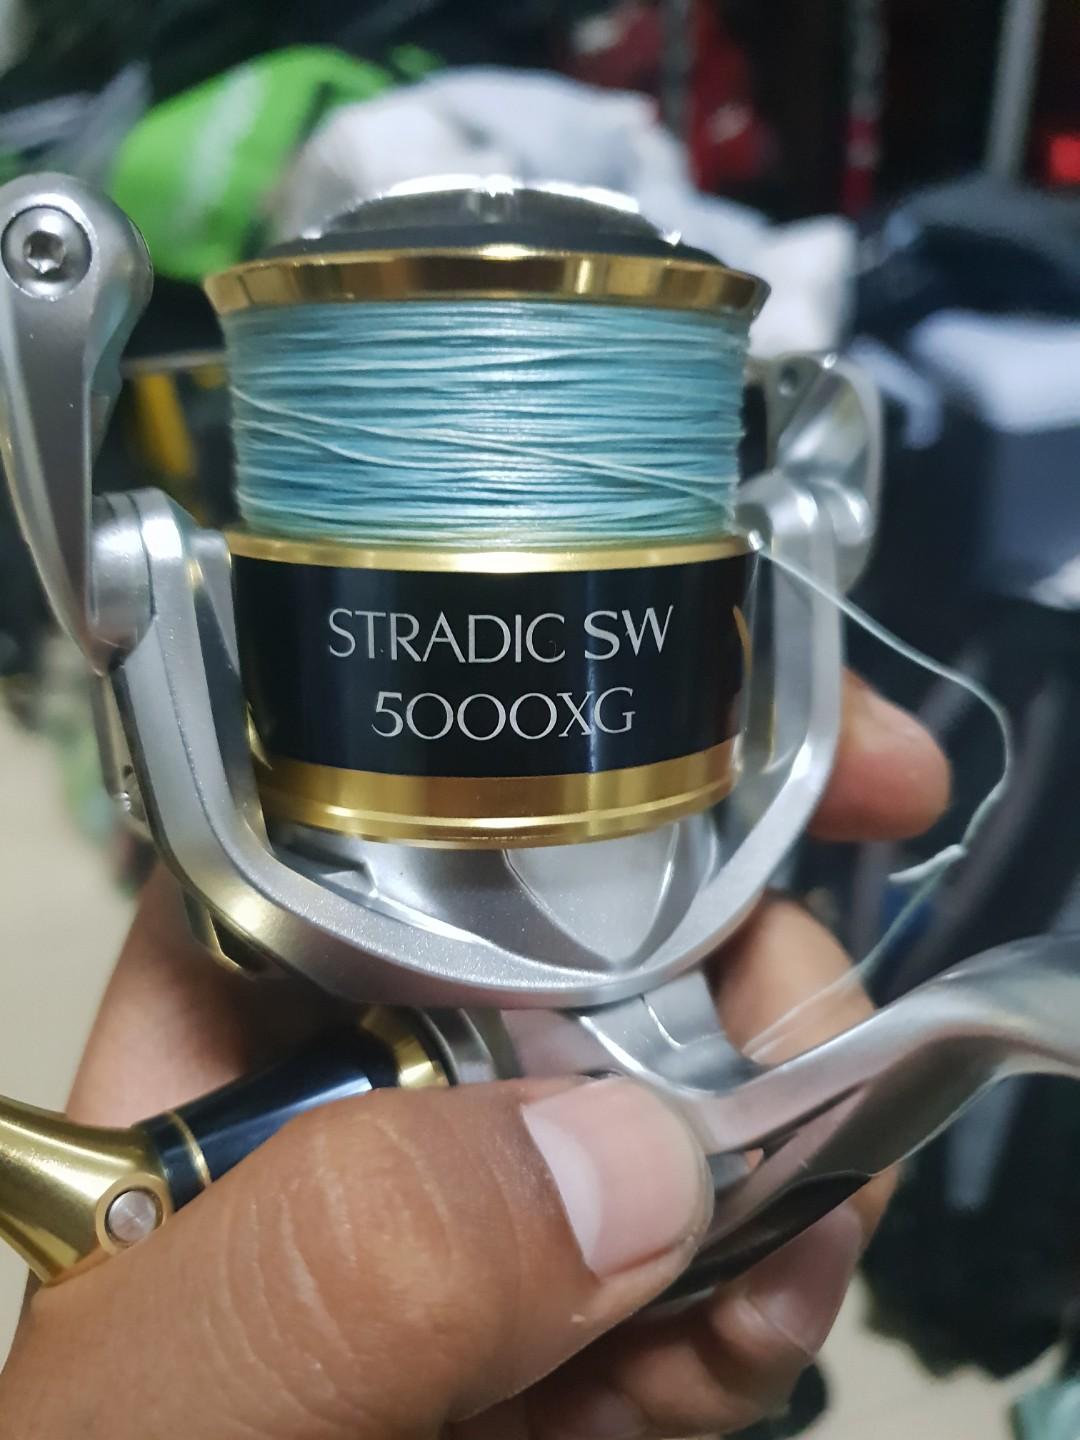 Shimano Stradic SW 5000XG